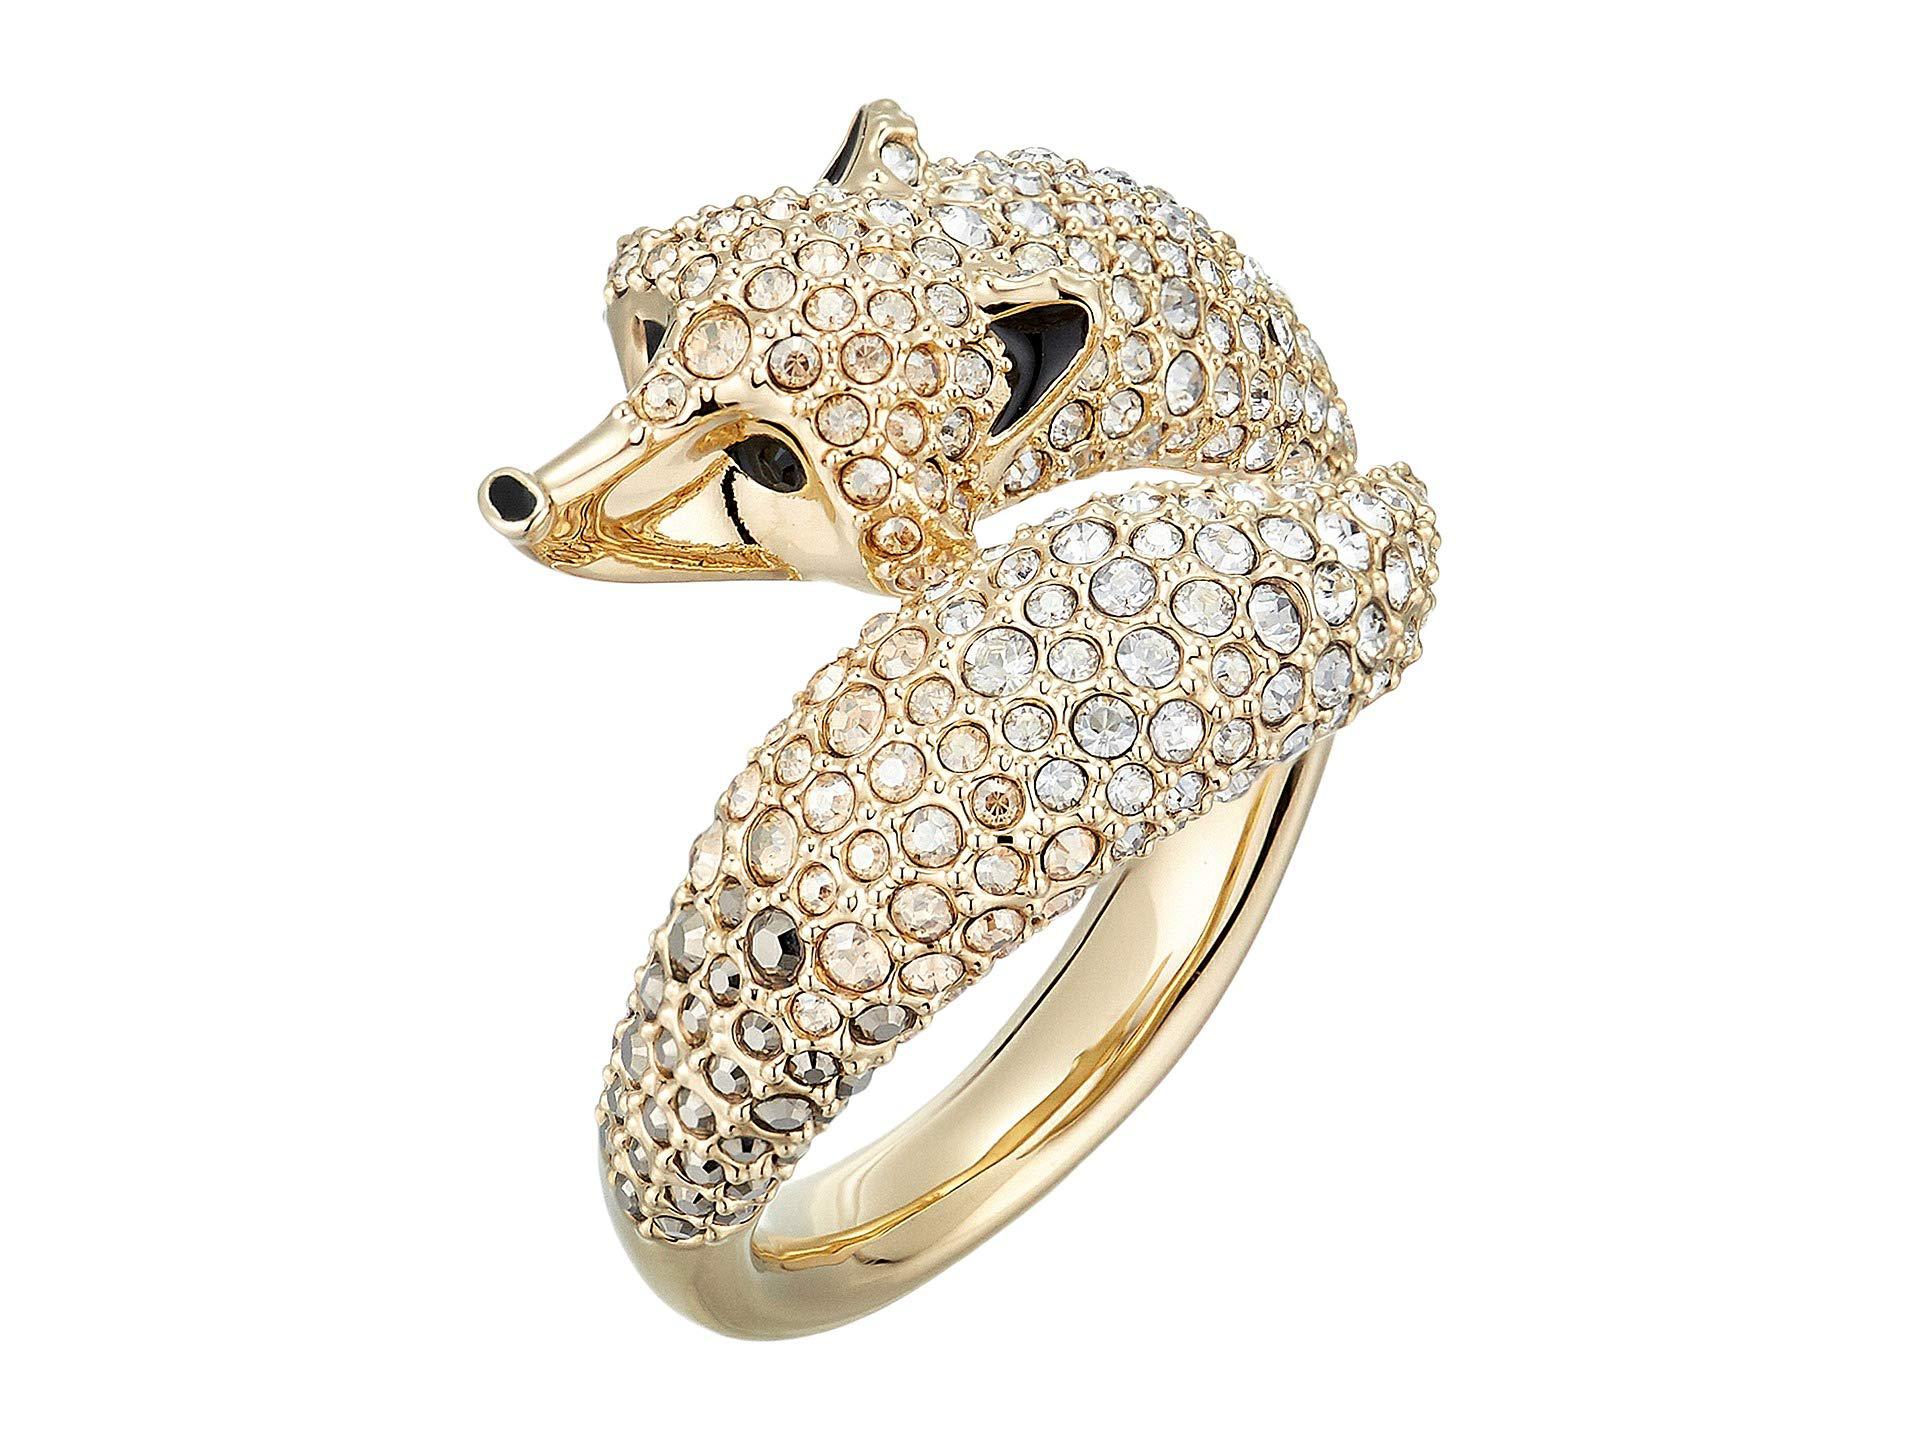 March Fox ring swarovski jewelry gold plating size 55 5410400